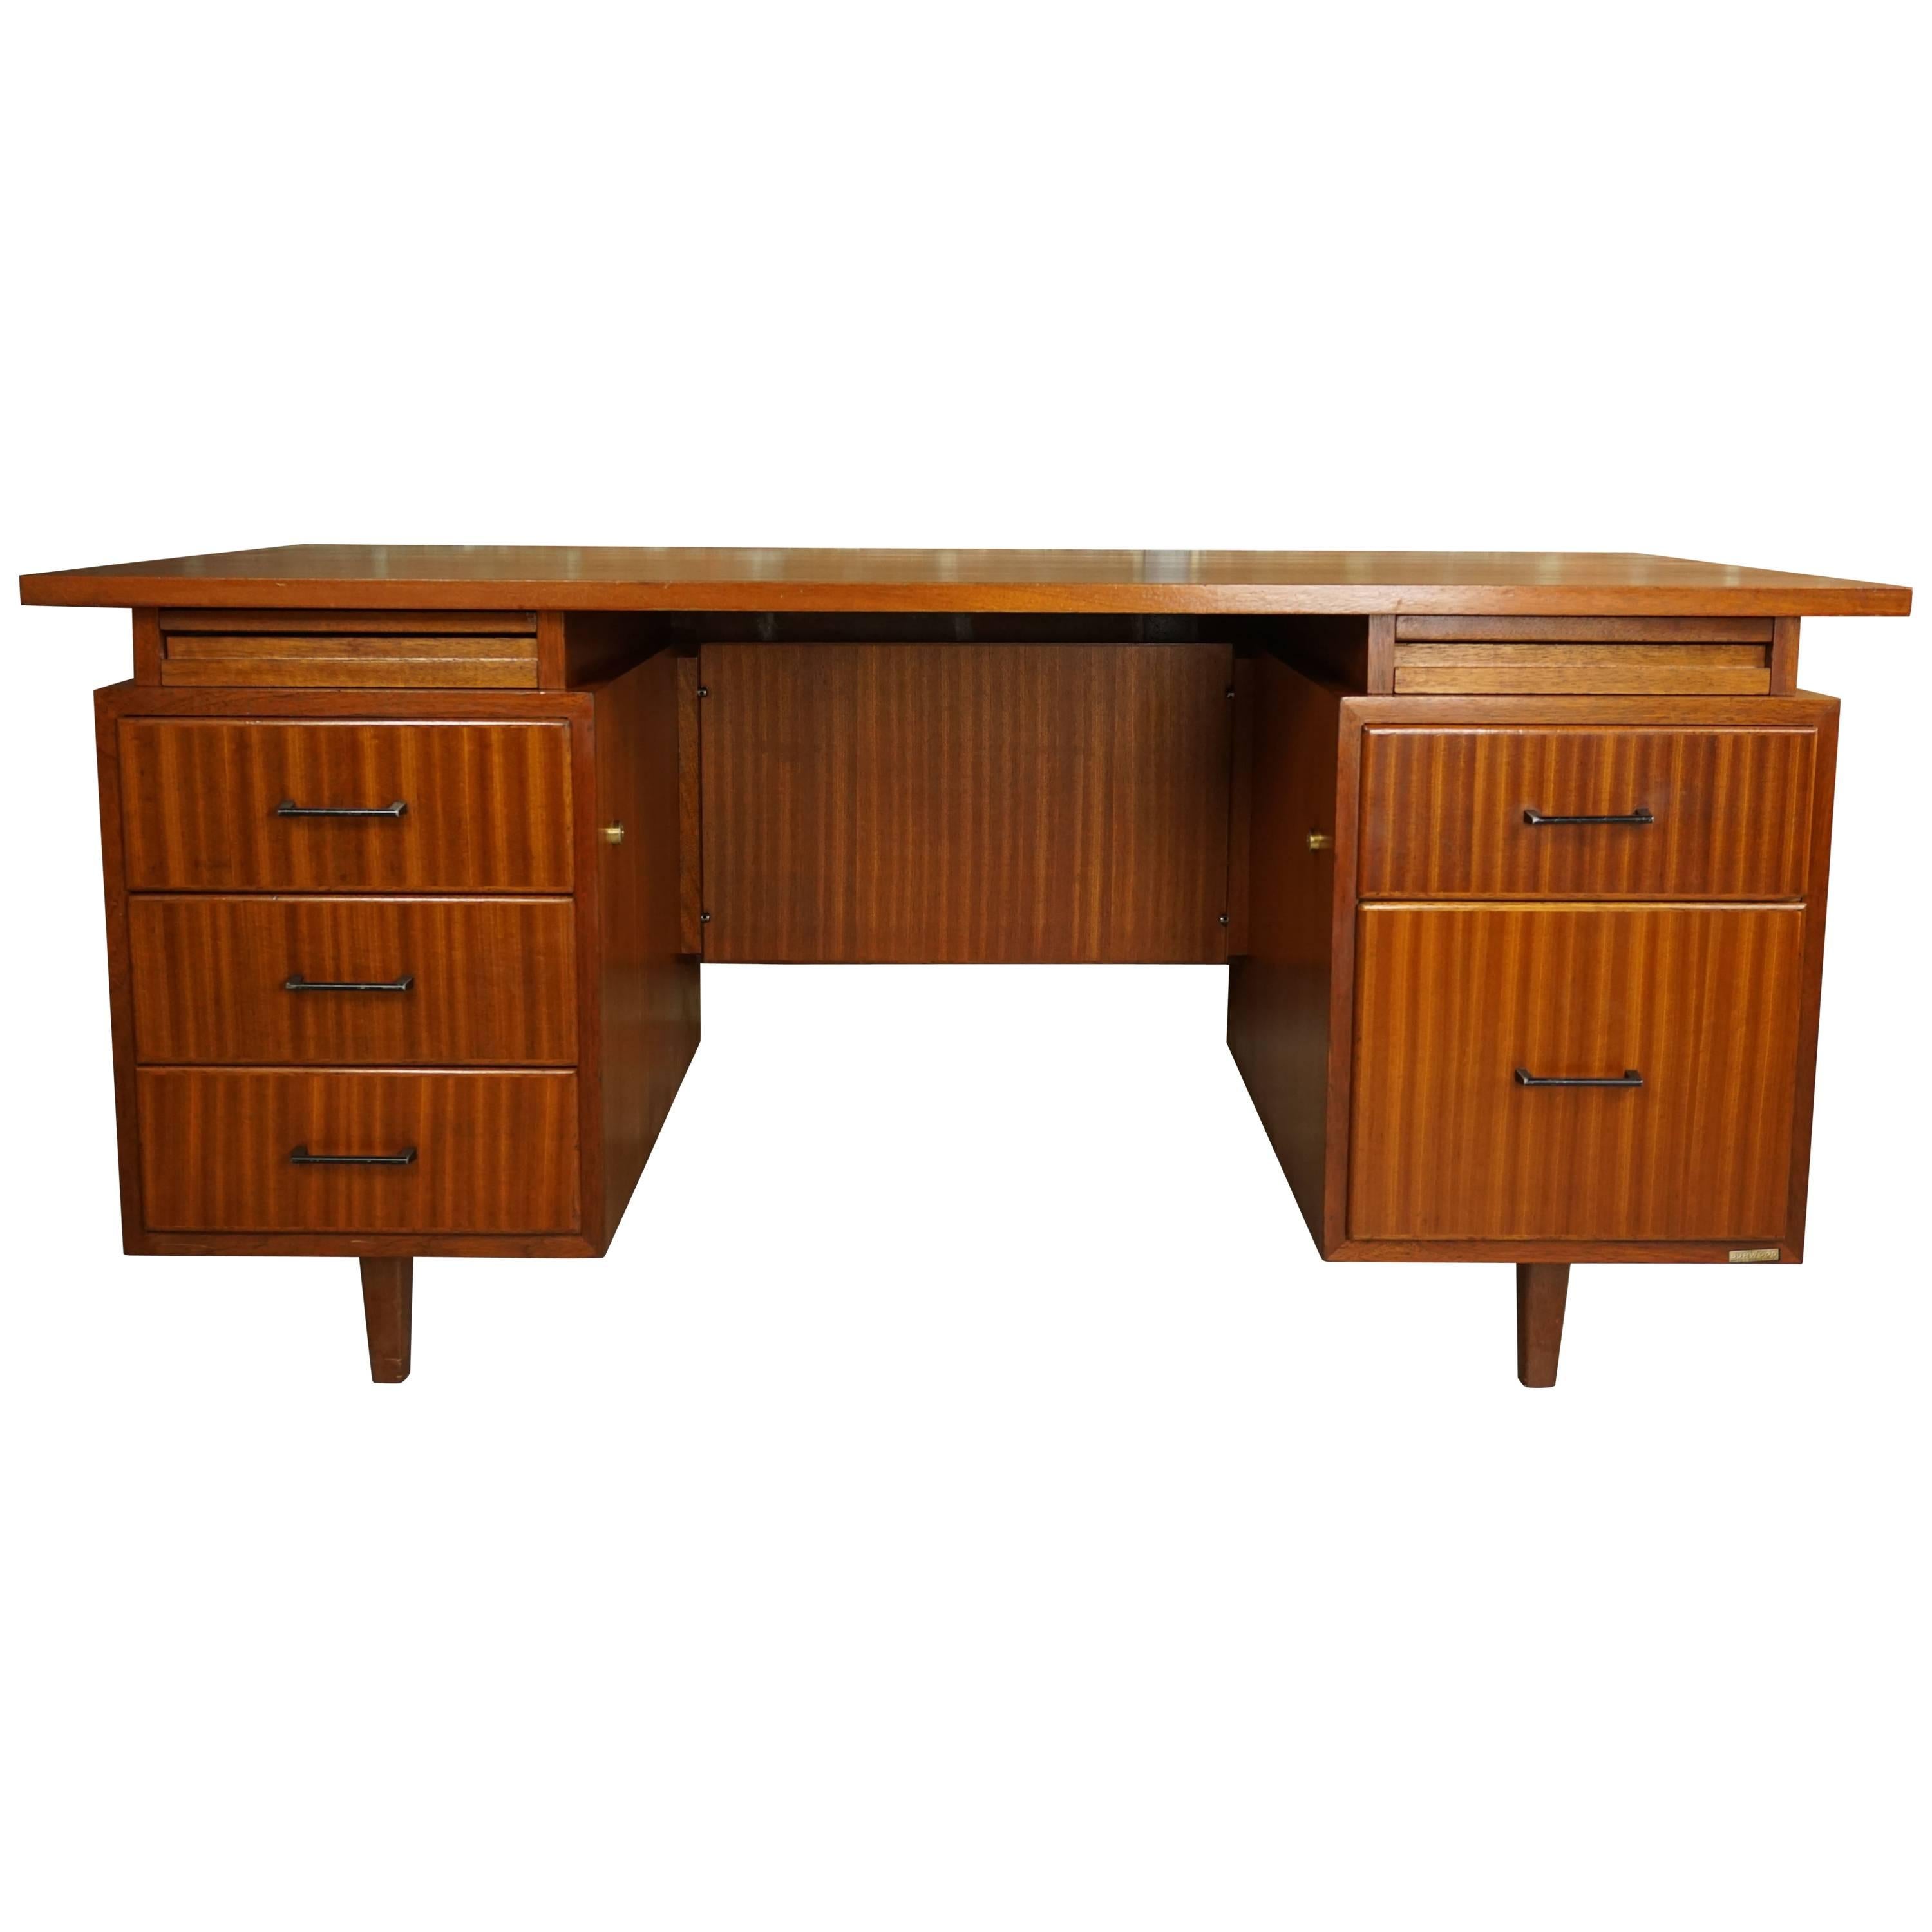 Midcentury Dutch Design "Burwood" Executive Desk